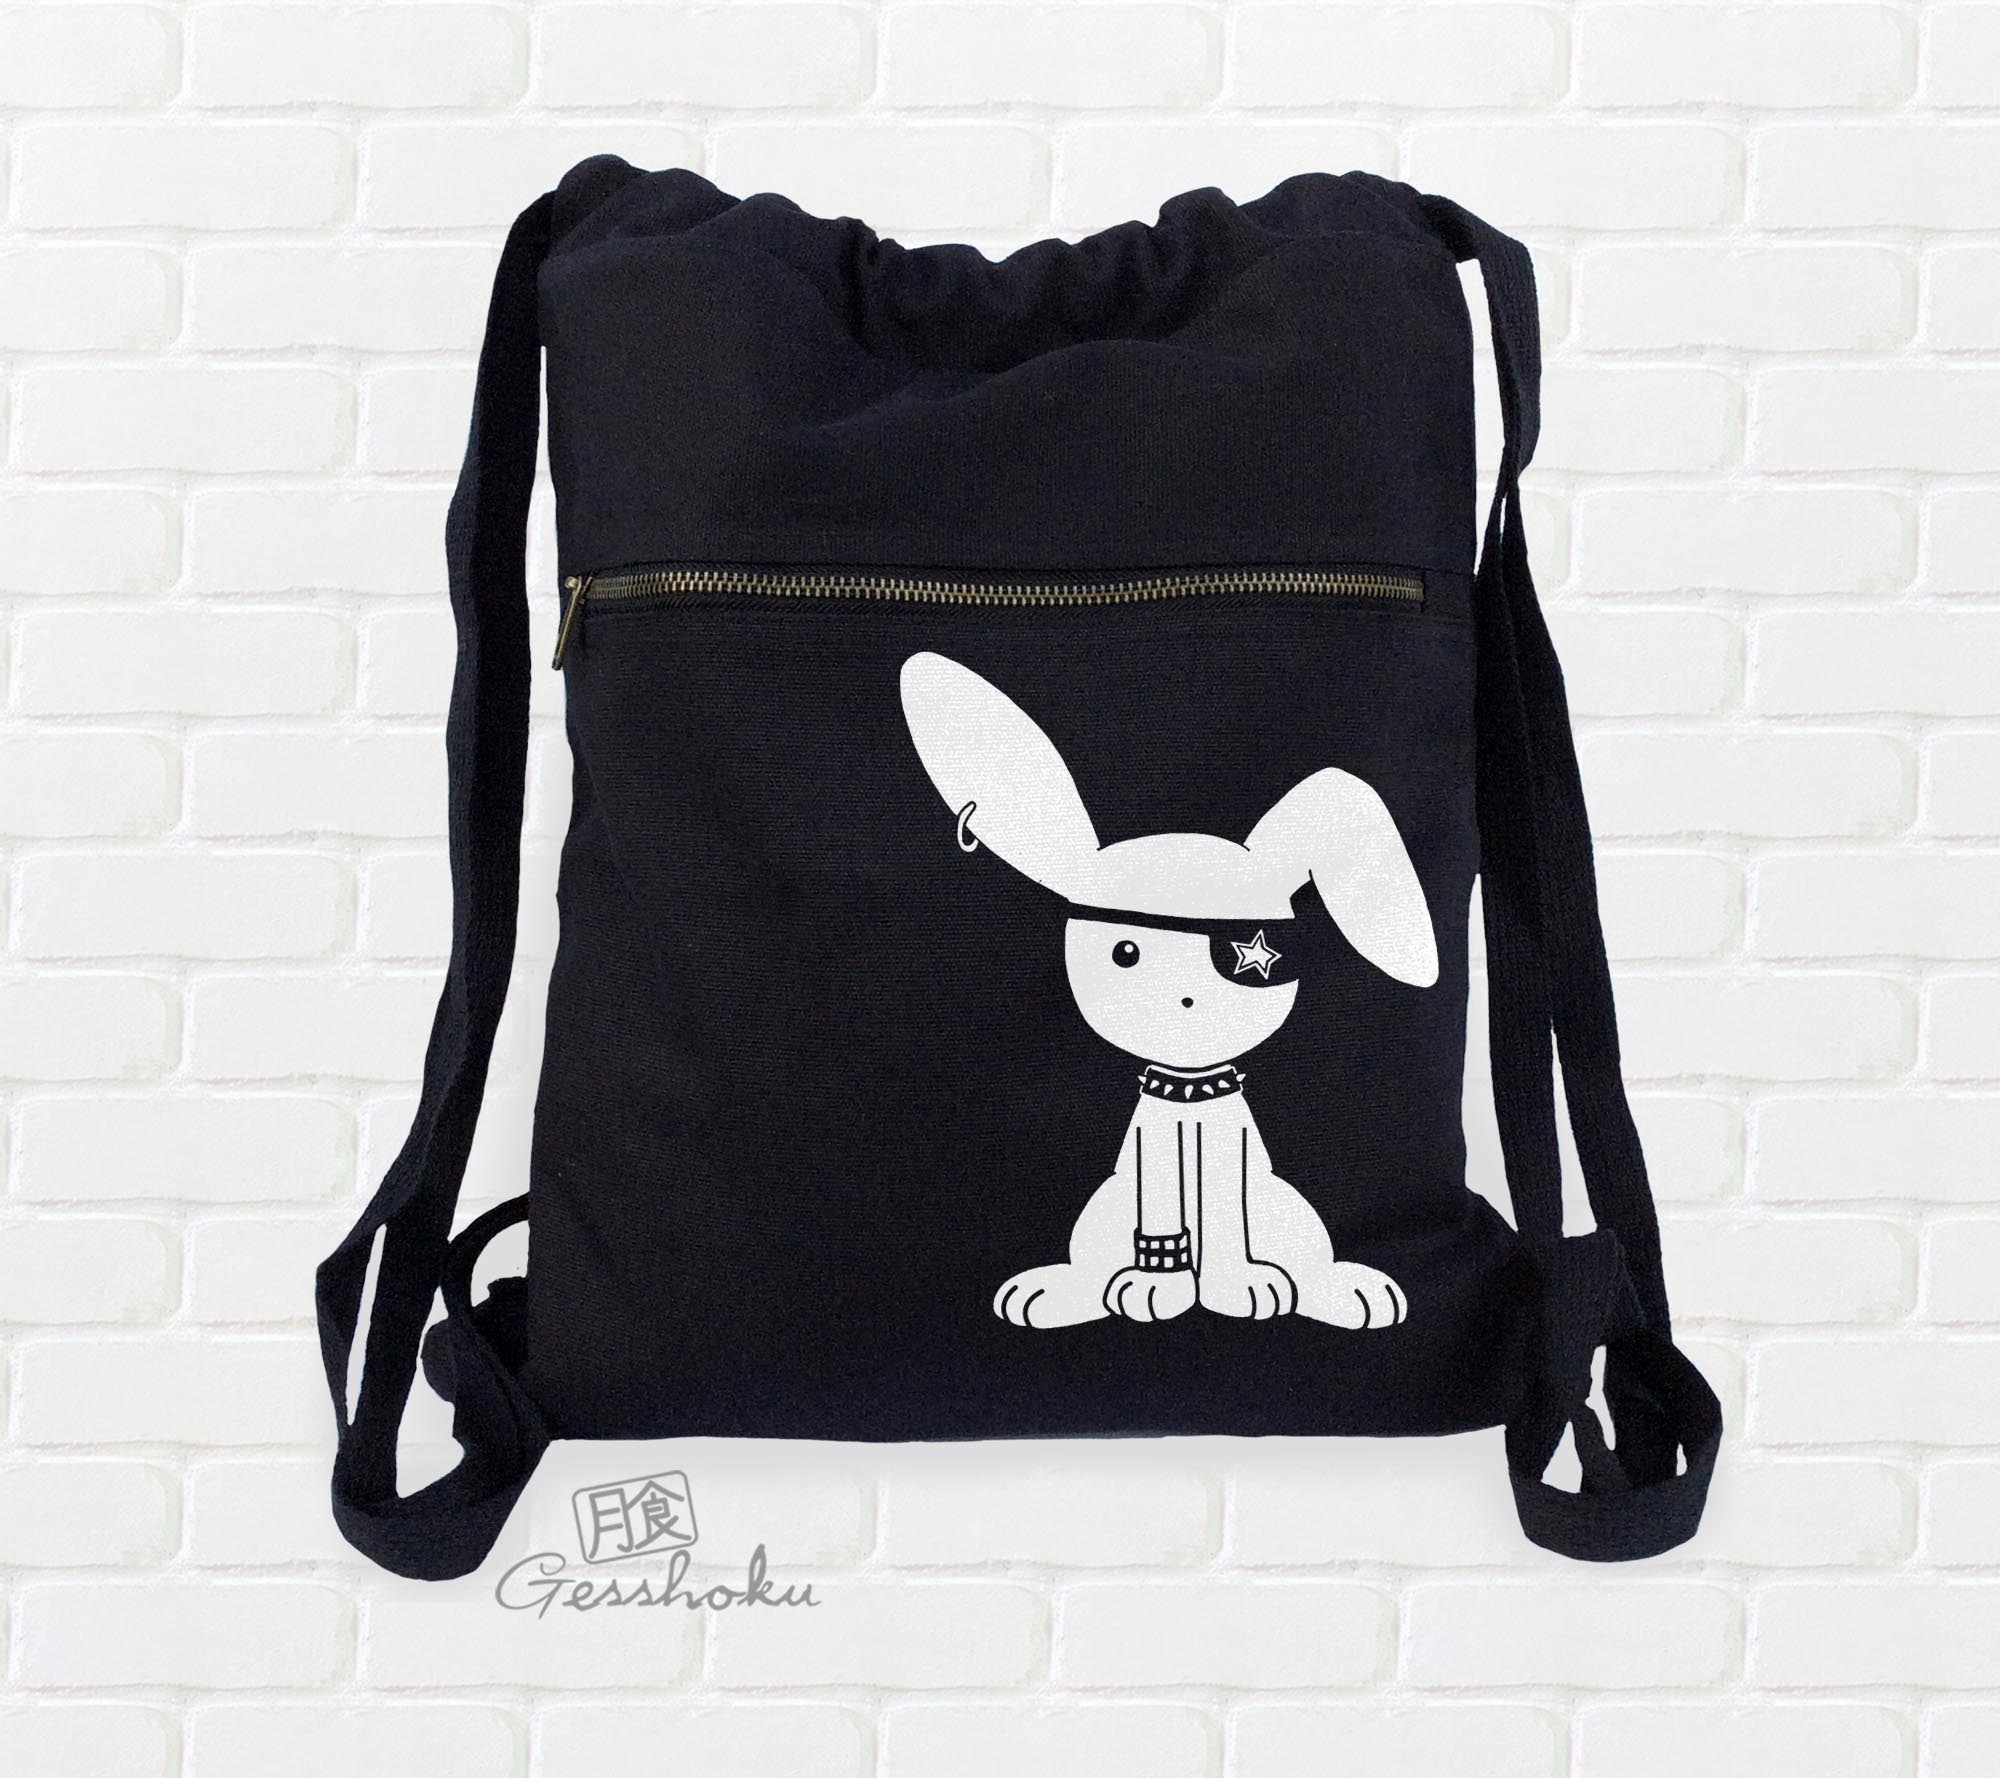 Jrock Bunny Cinch Backpack - Black